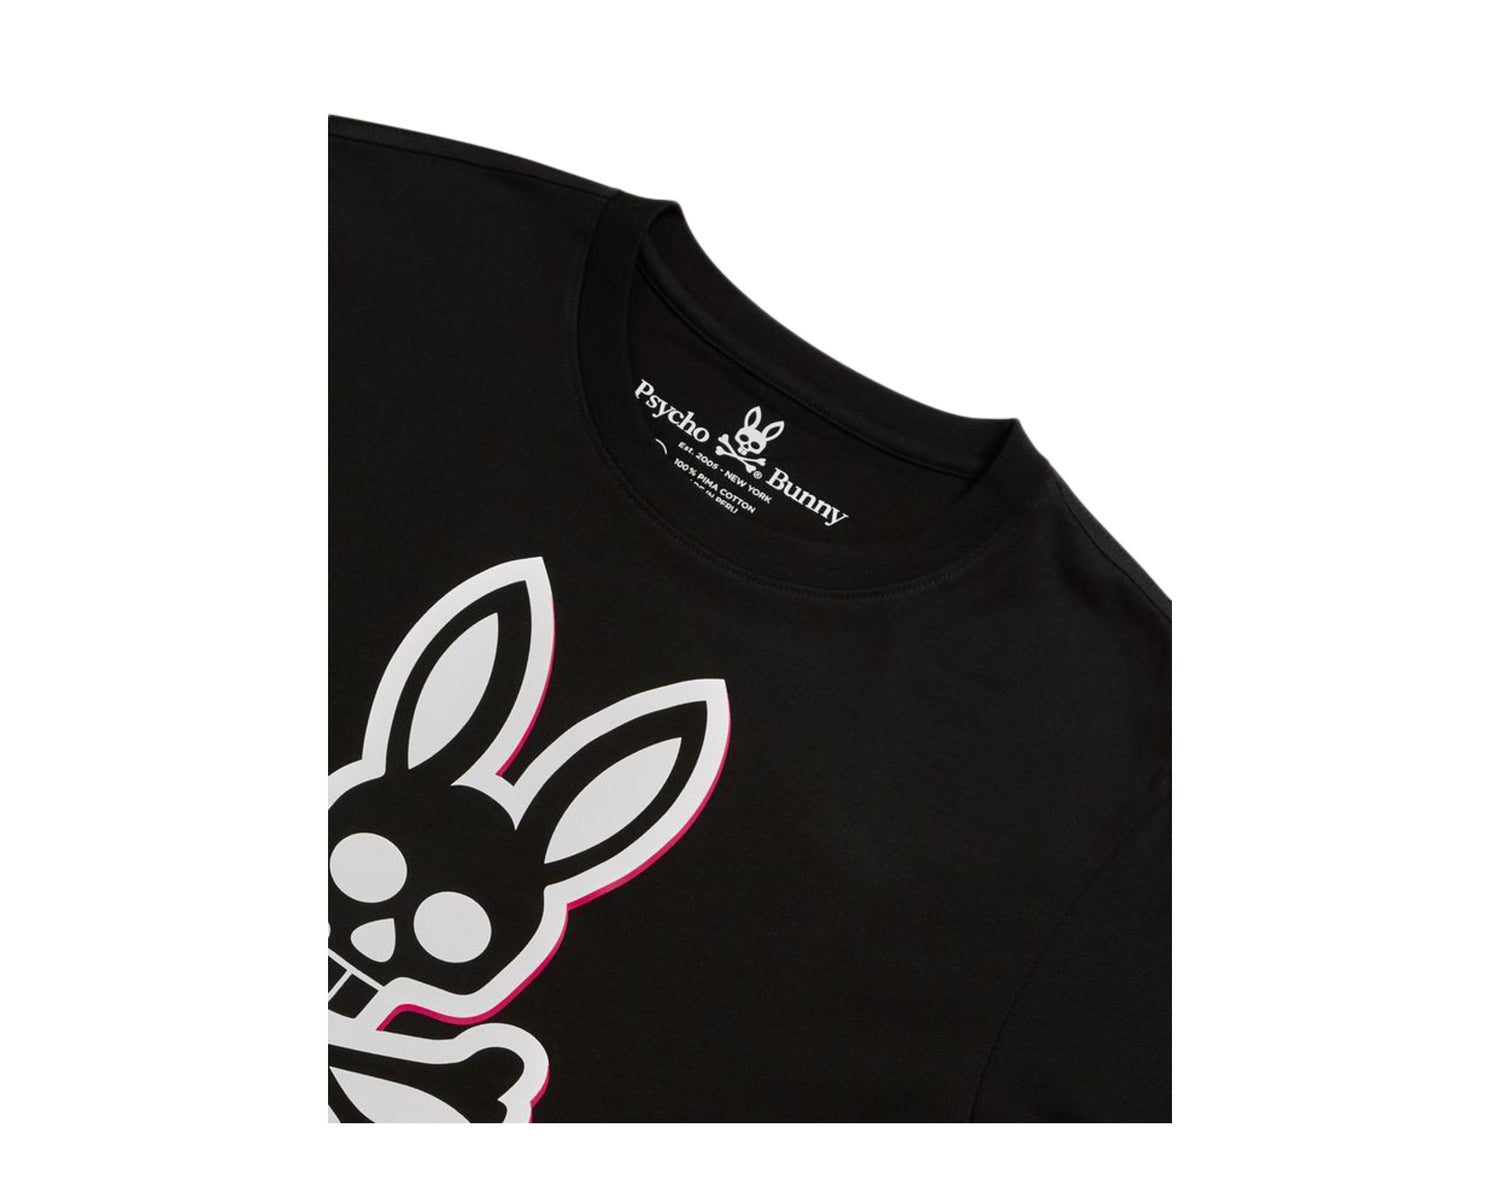 Psycho Bunny Portland Graphic Men's Tee Shirt